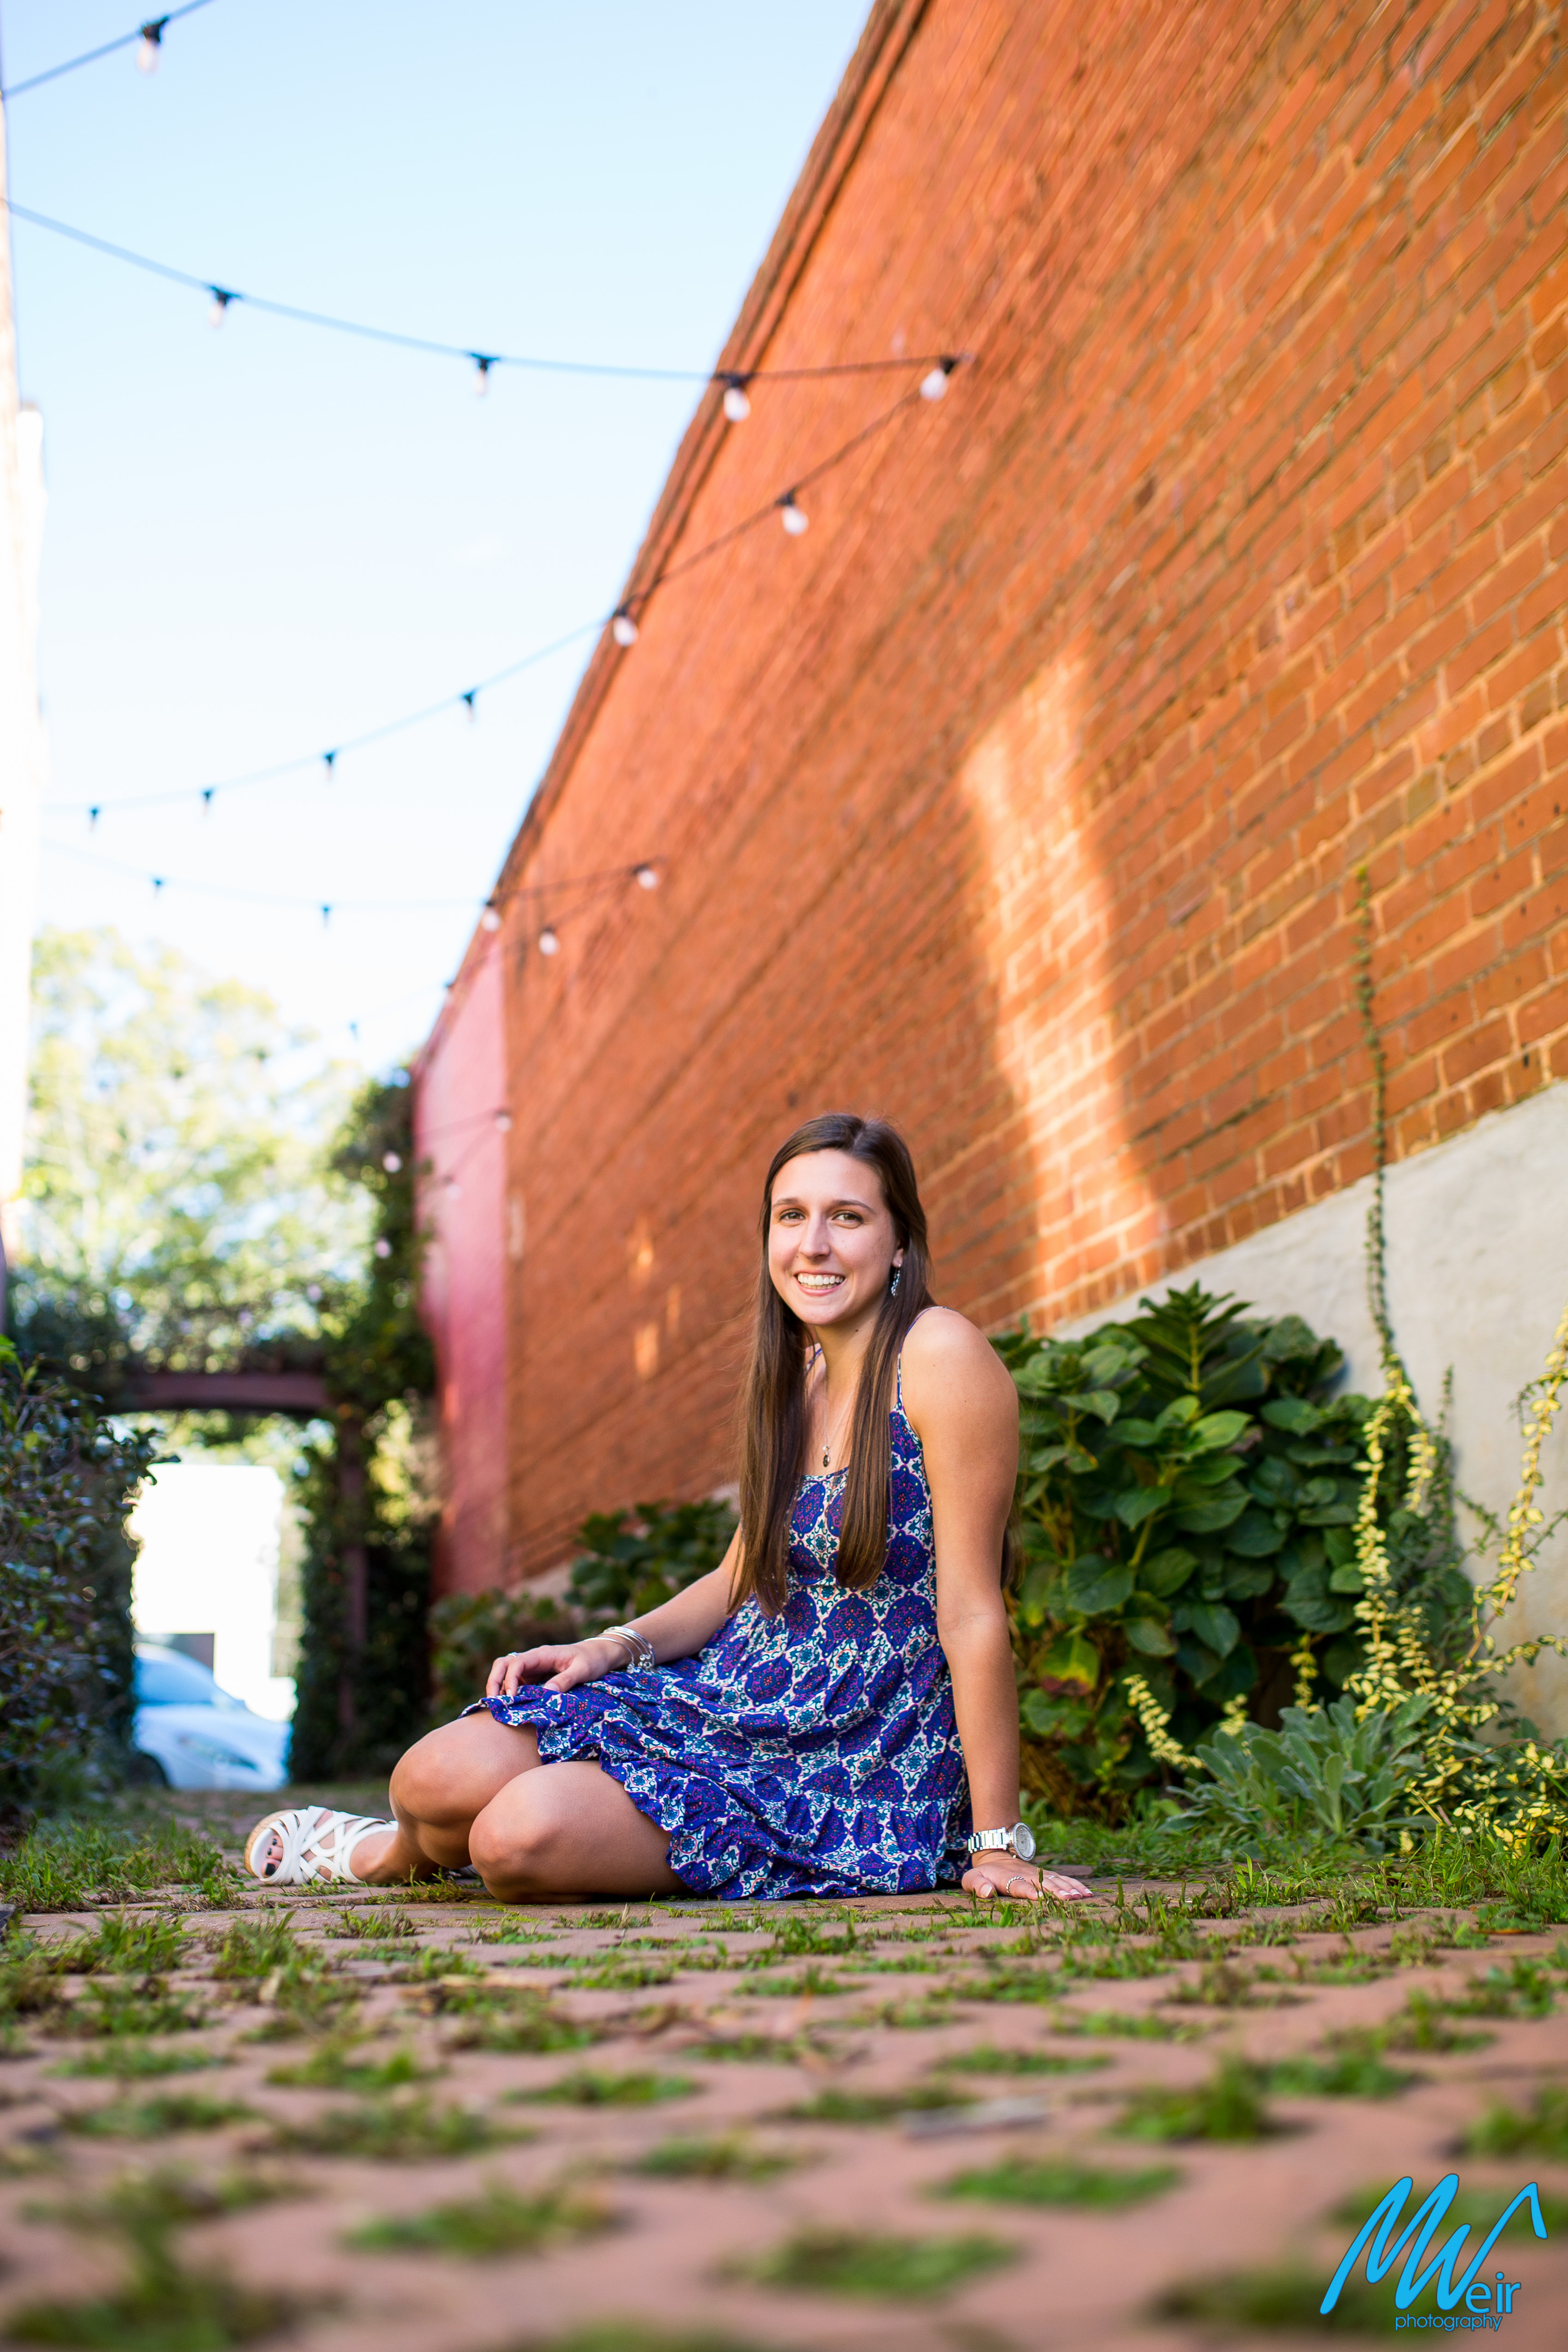 high school senior sitting in a brick paver alleyway